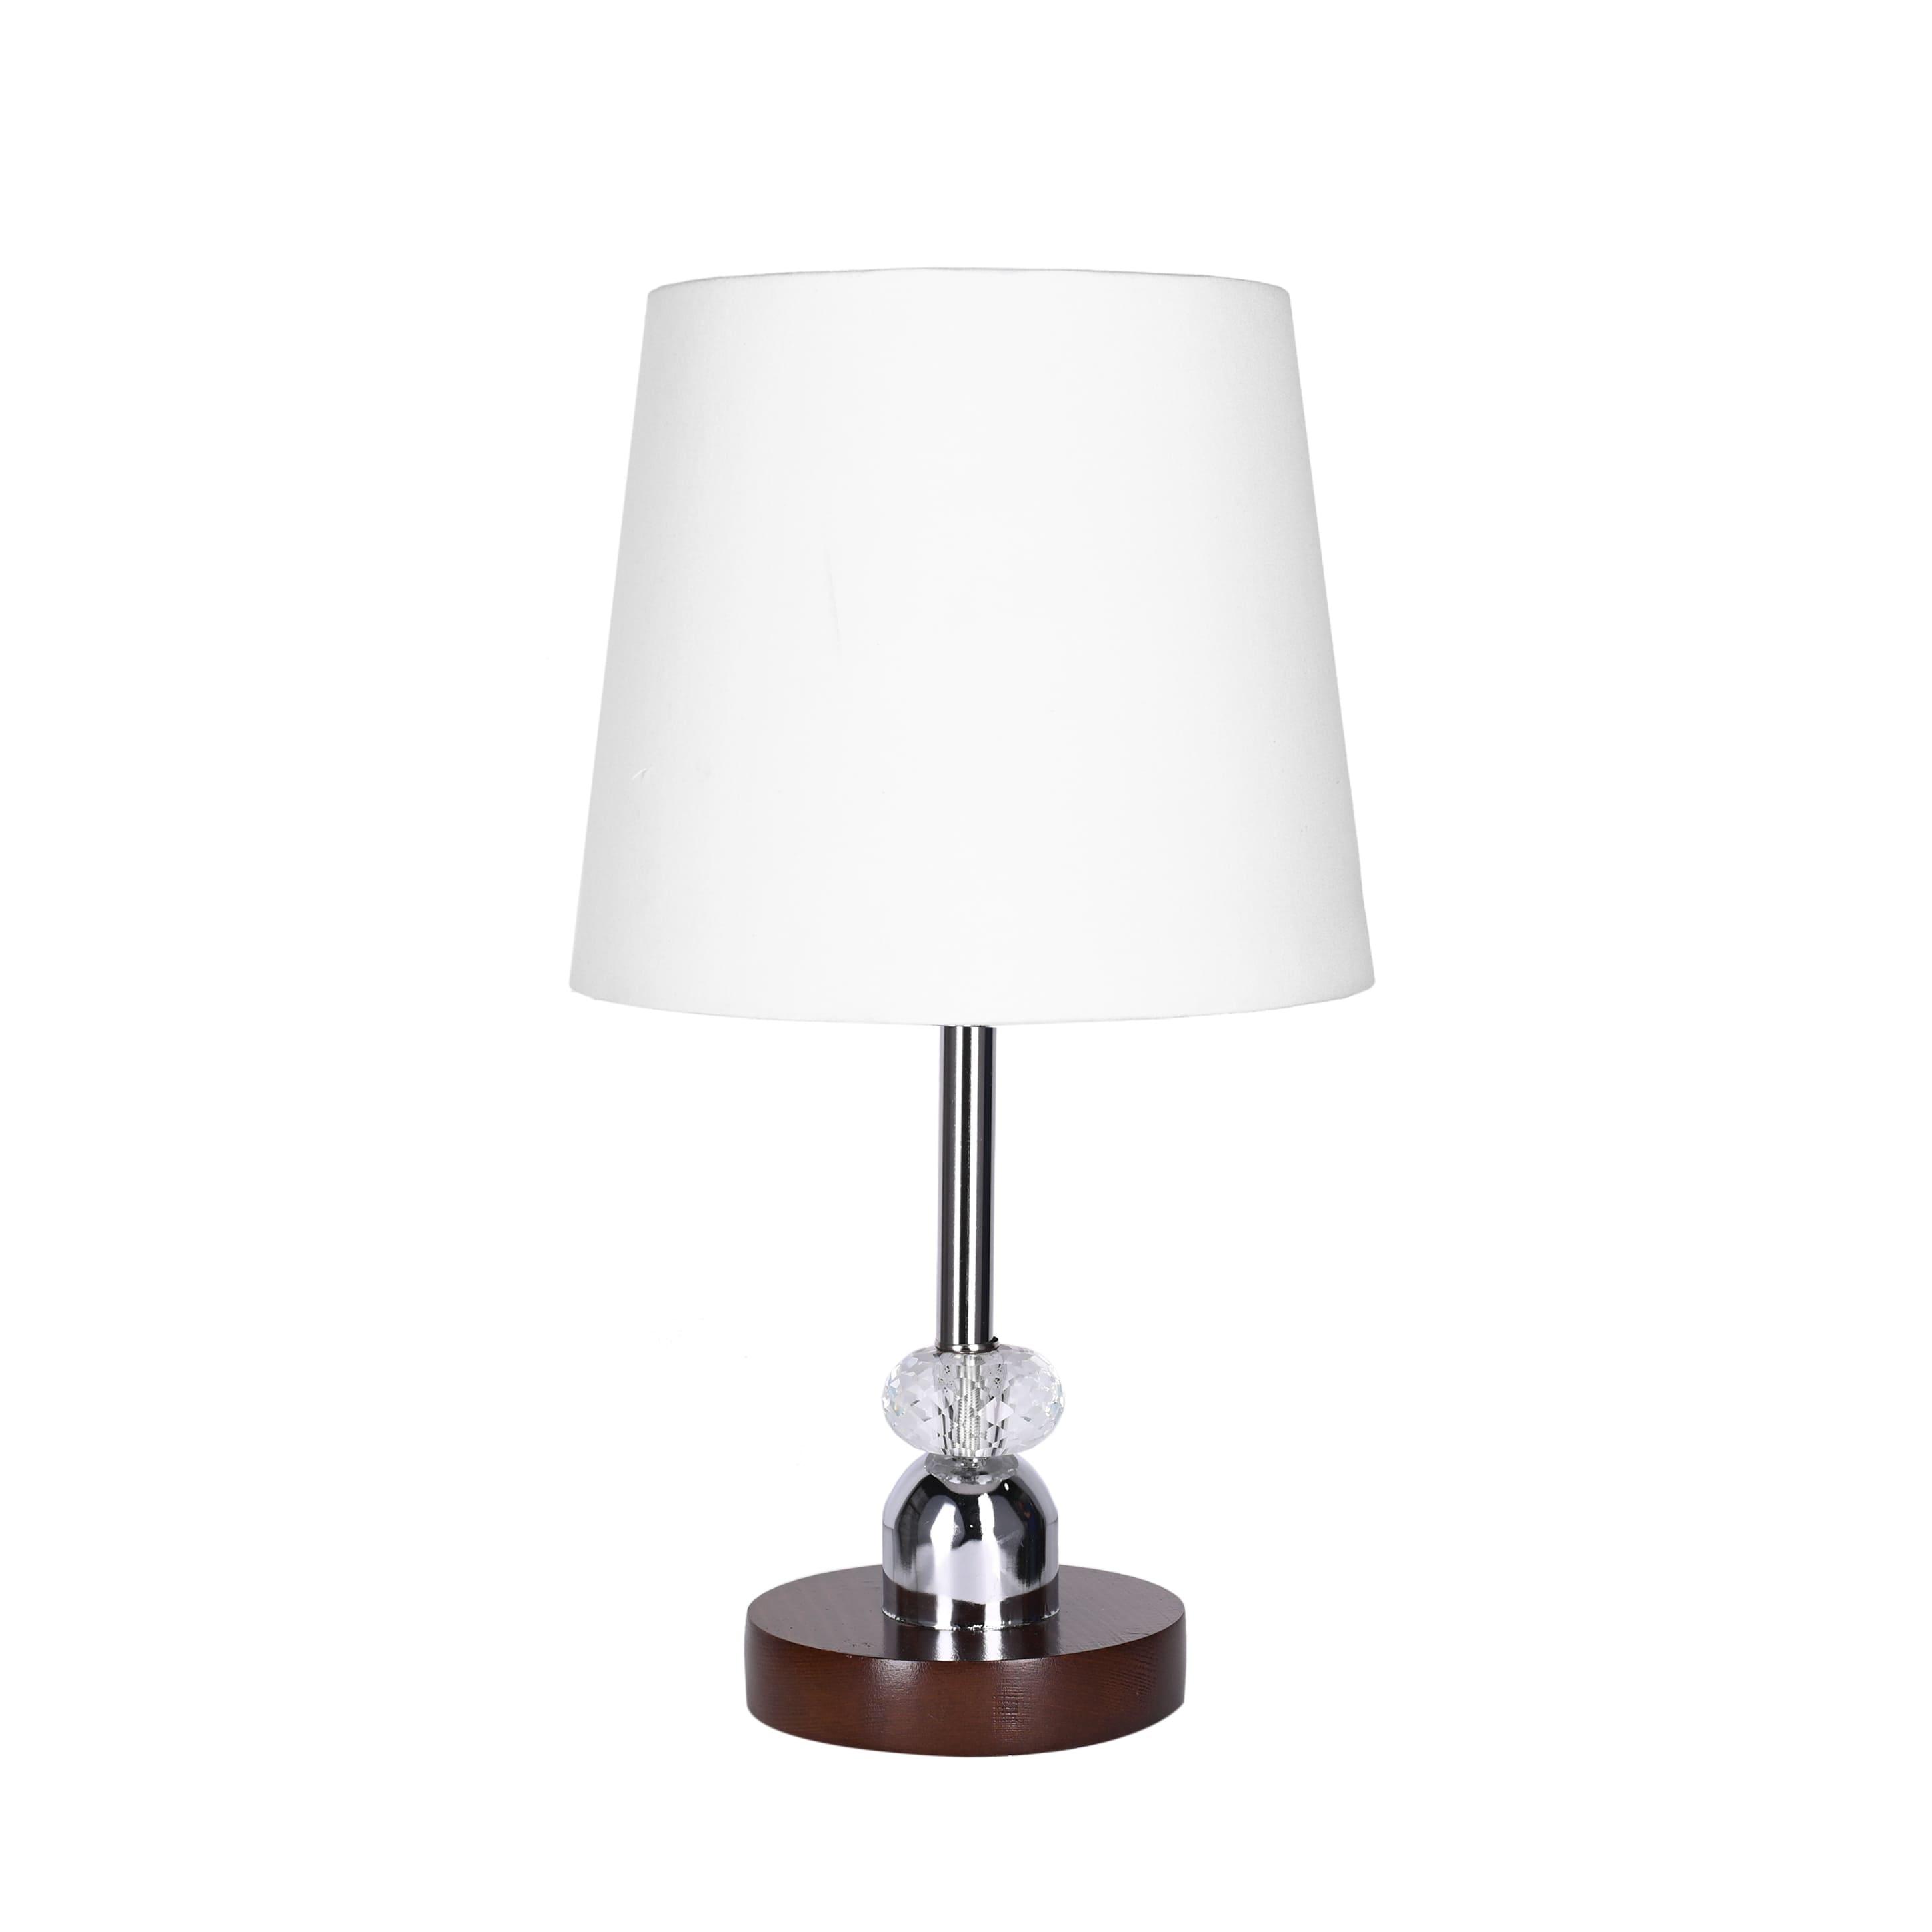 El Rawda White Modern Wooden Desk Lamp 47×47 cm - 1 Lamp - RL-TL-A-002